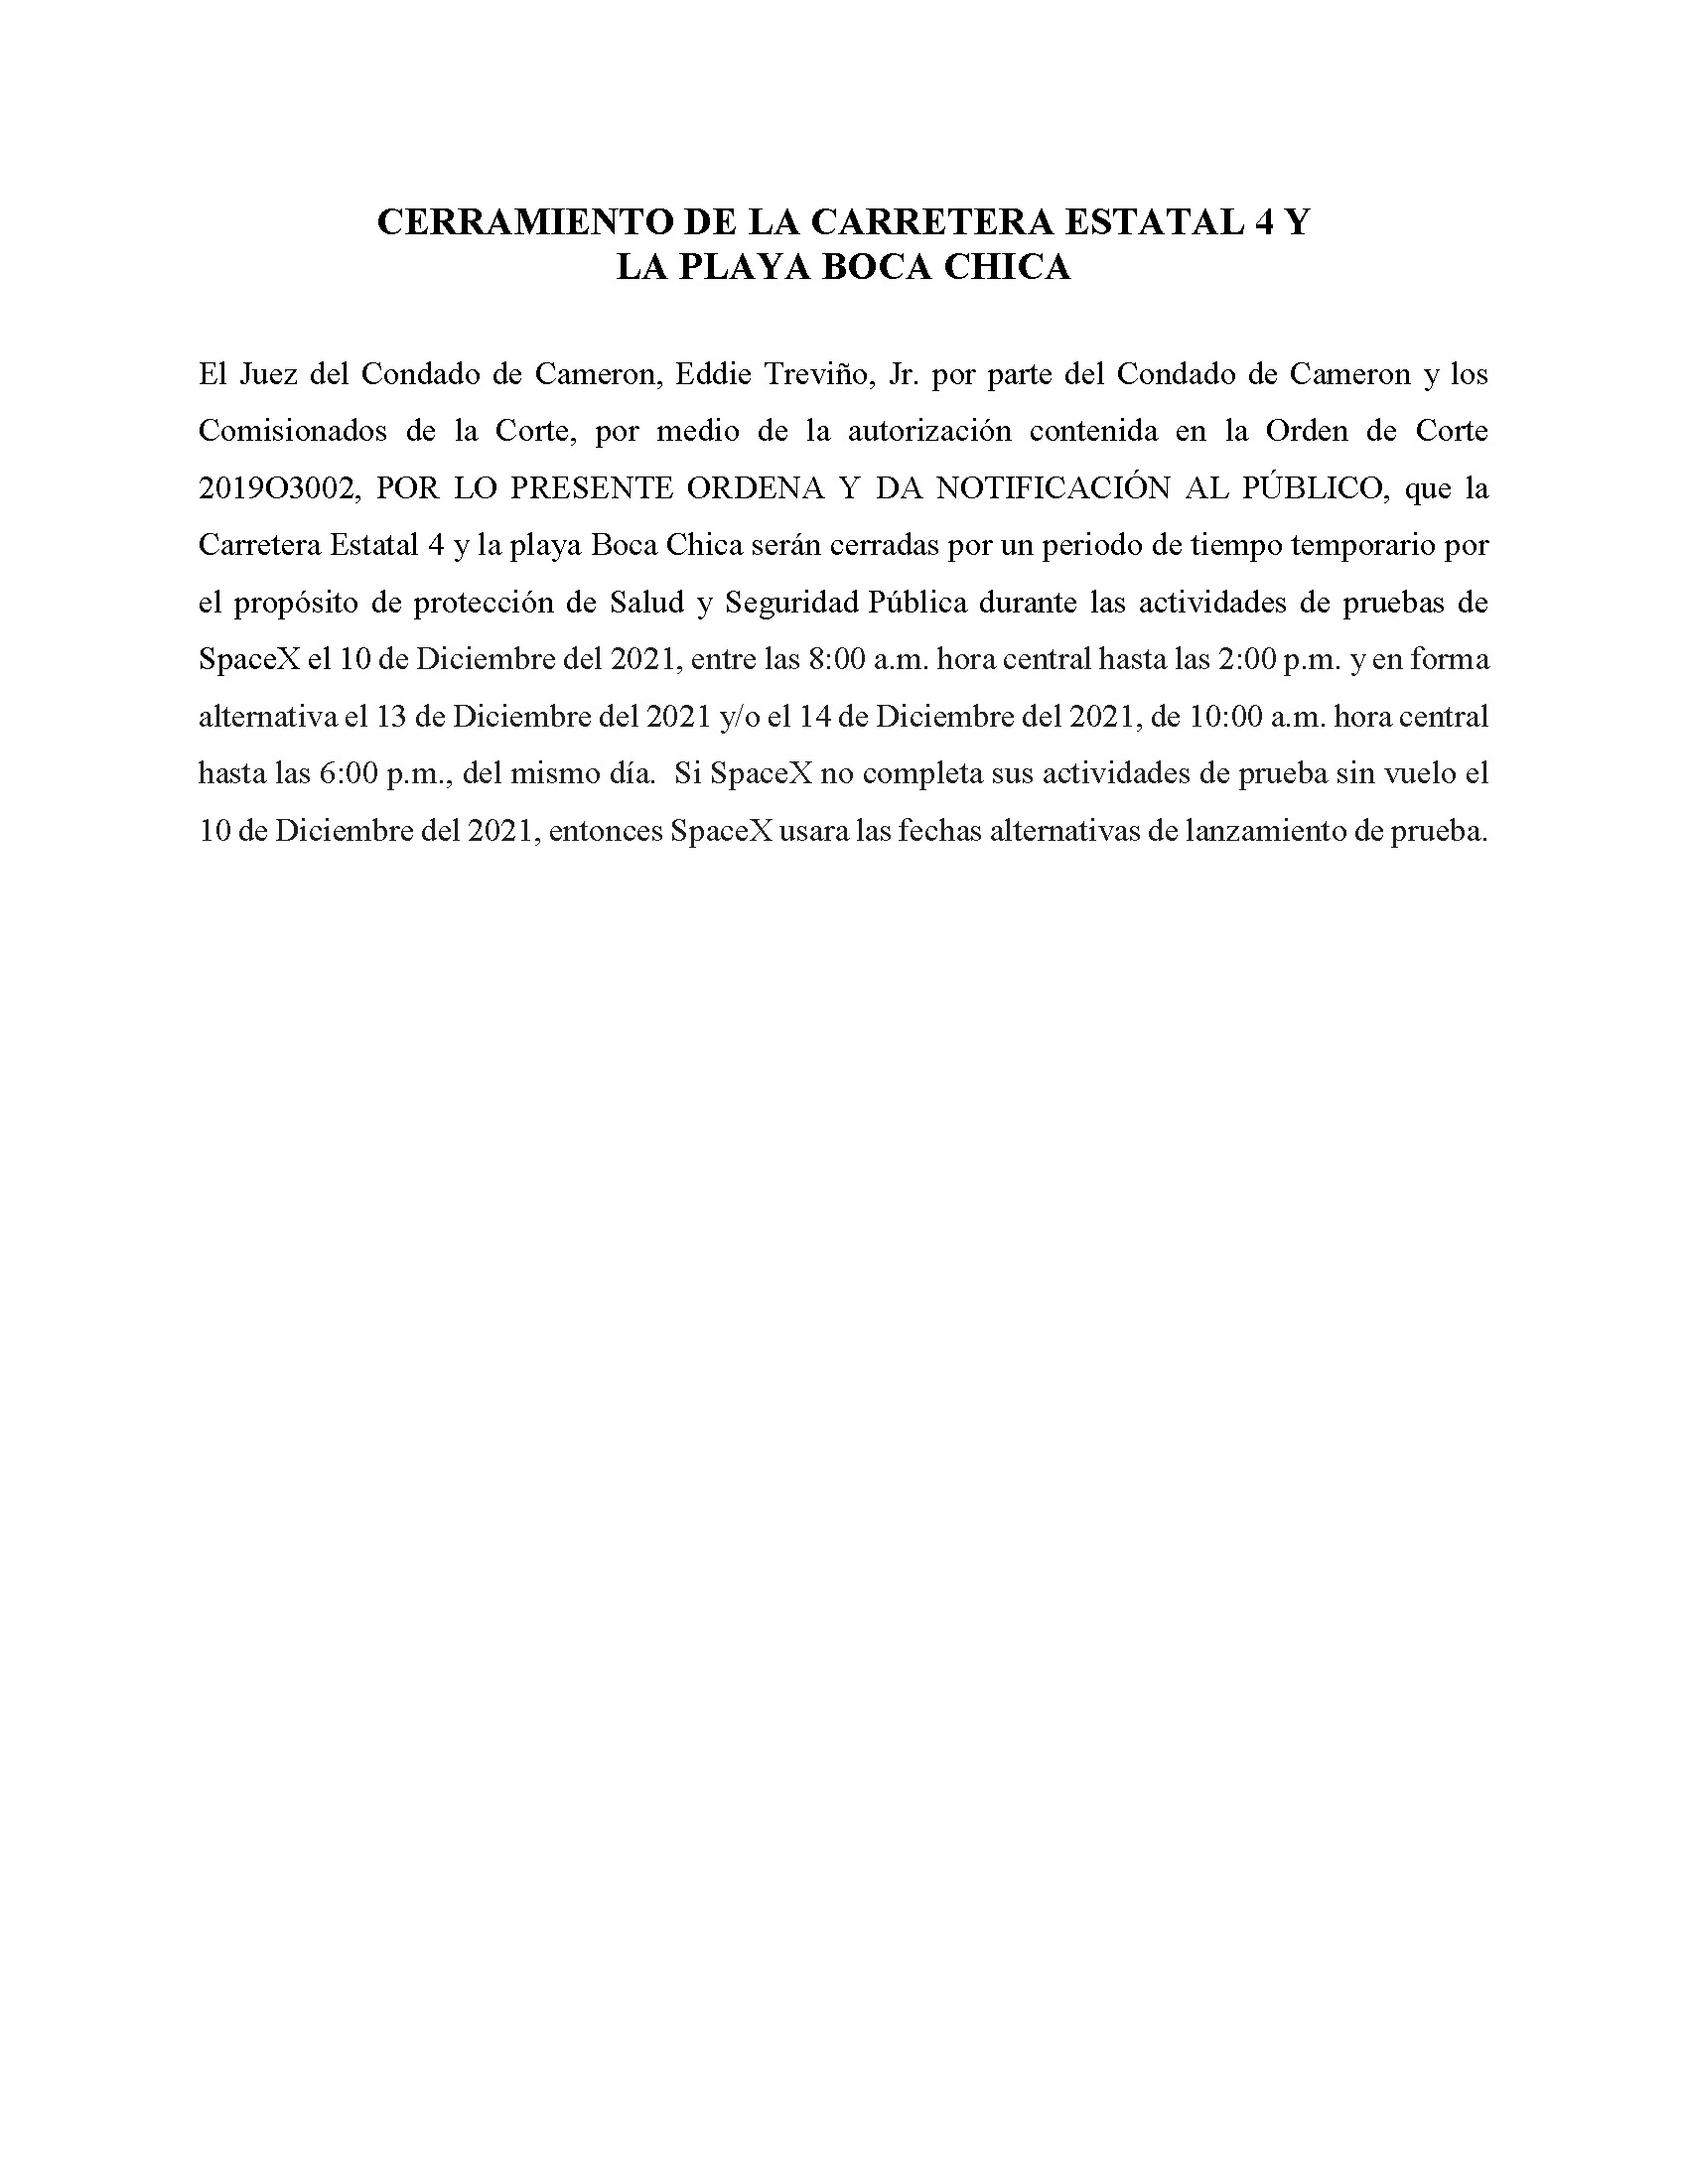 ORDER.CLOSURE OF HIGHWAY 4 Y LA PLAYA BOCA CHICA.SPANISH.12.10.2021